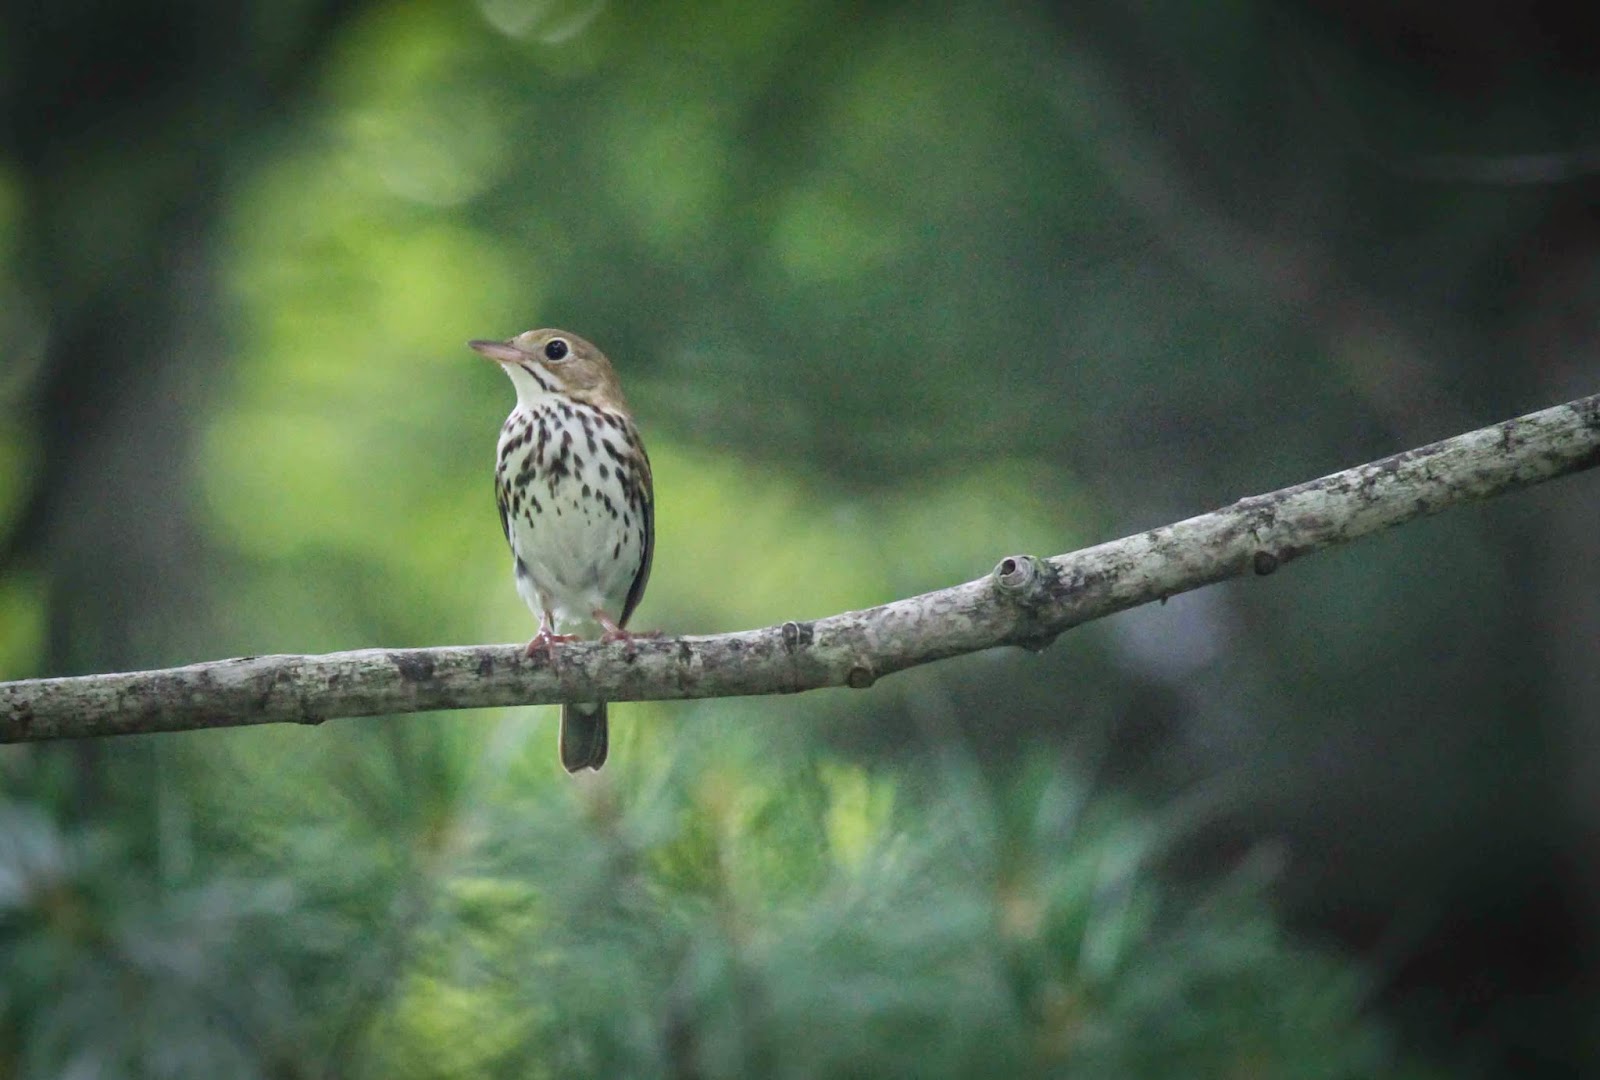 Gale's Photo and Birding Blog: Ovenbird